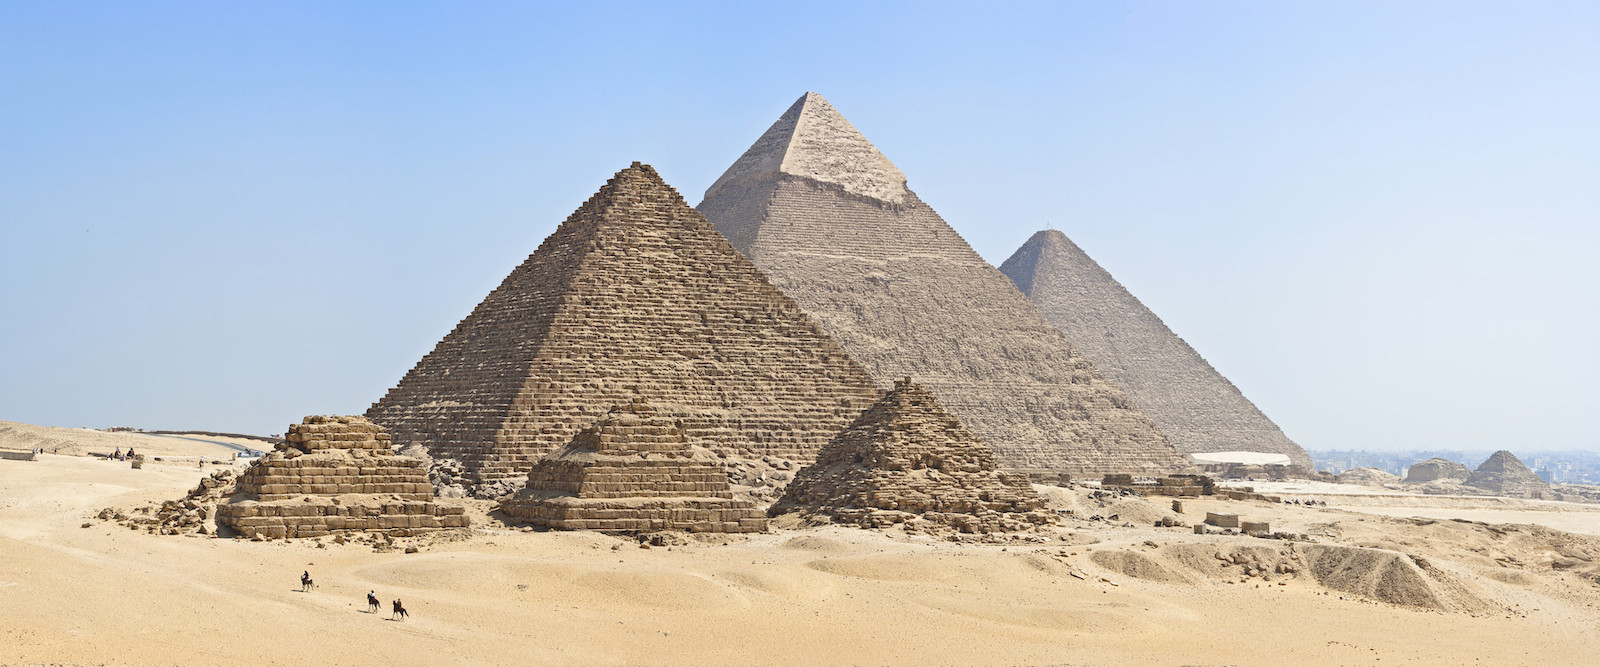 Giza Pyramids - Authoritarian vs. Democratic Technology